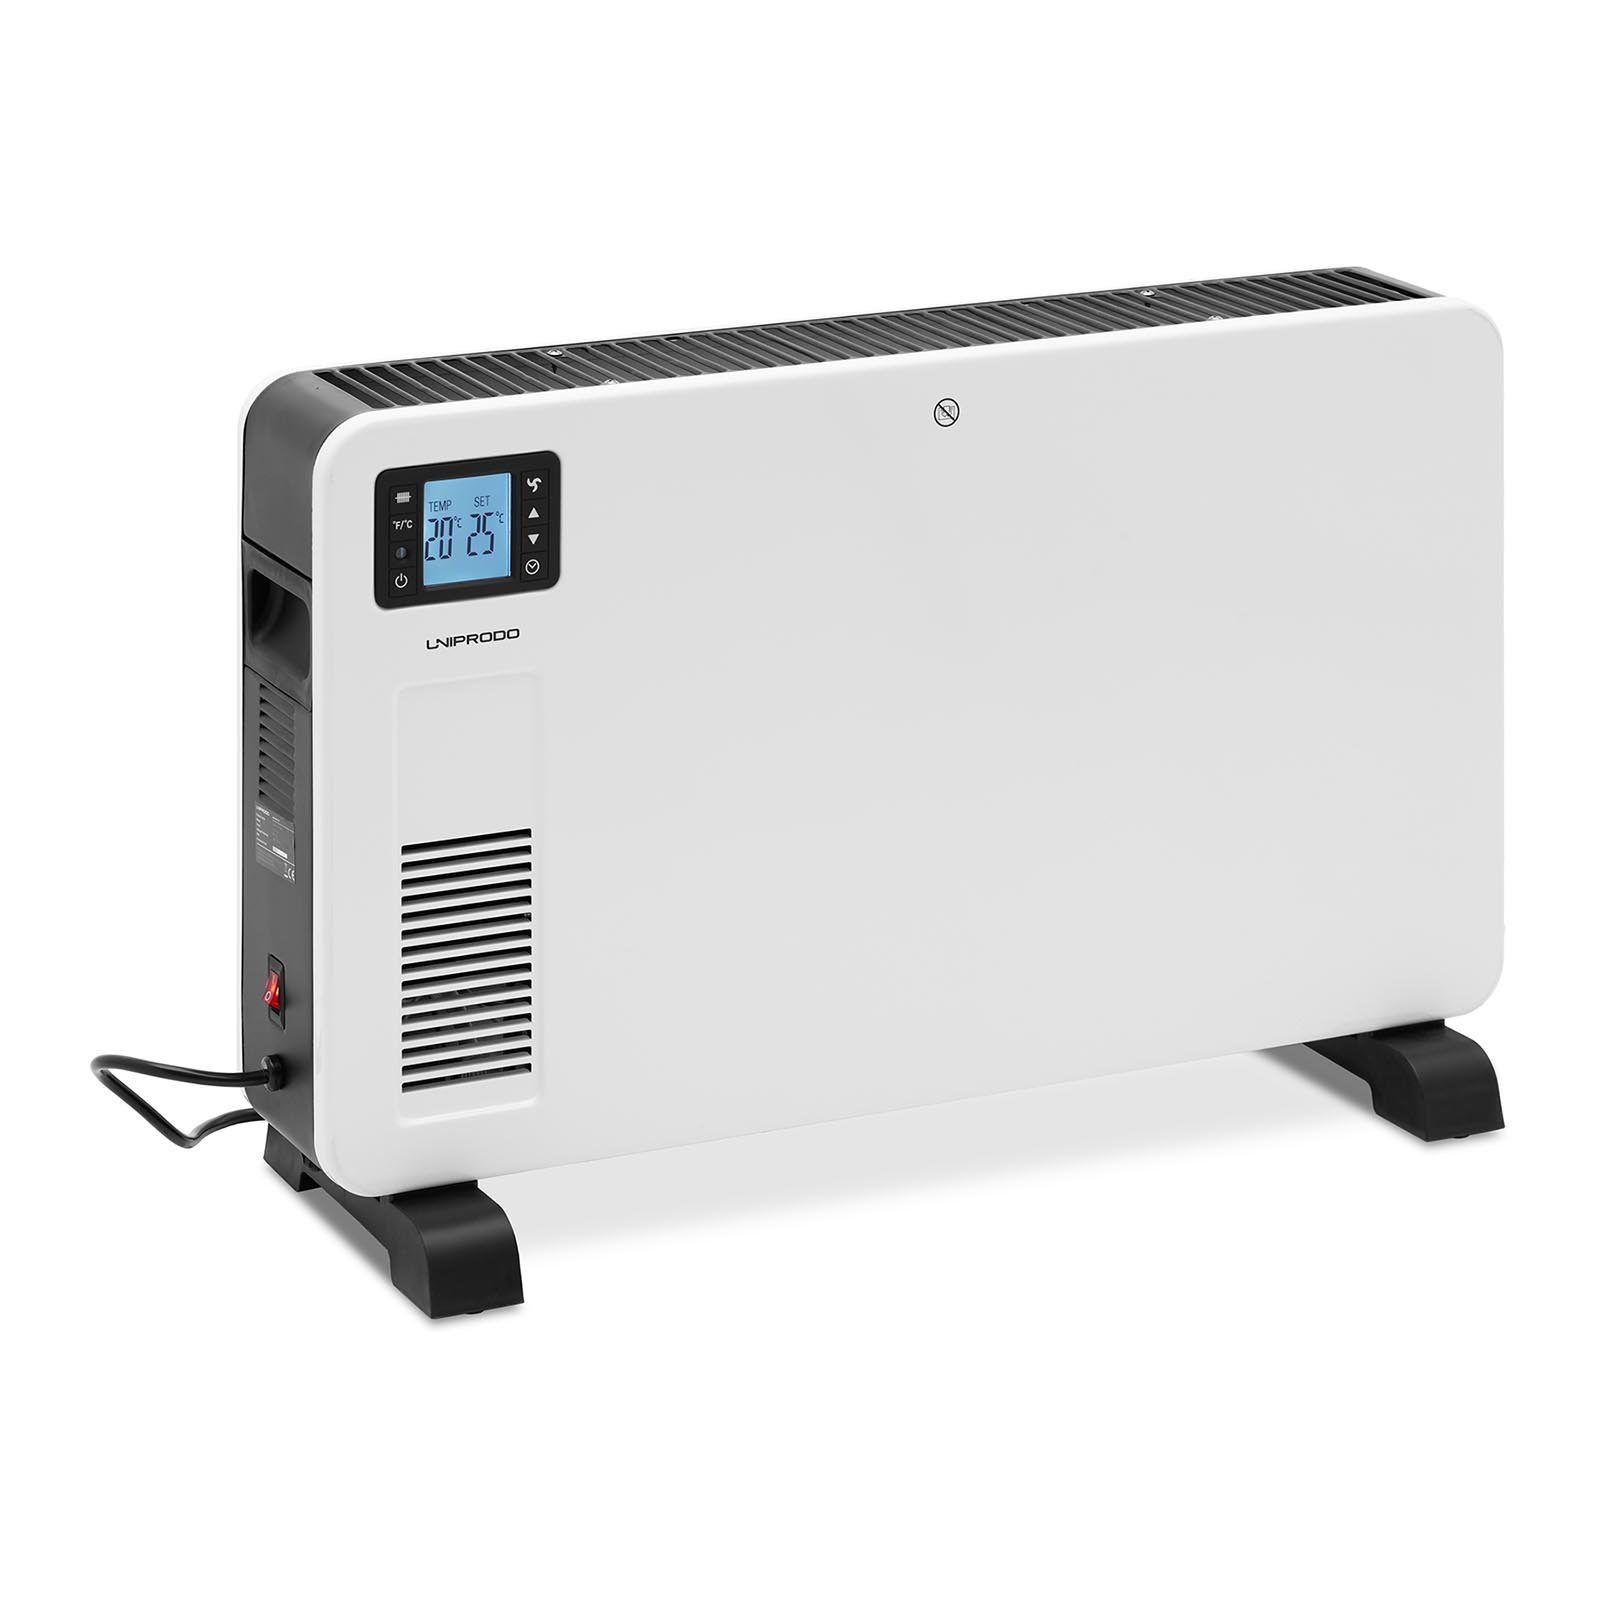 Uniprodo Konvektor m² °C 37 5 - W Konvektorheizung Timer Elektroheizung 2300 25 LCD